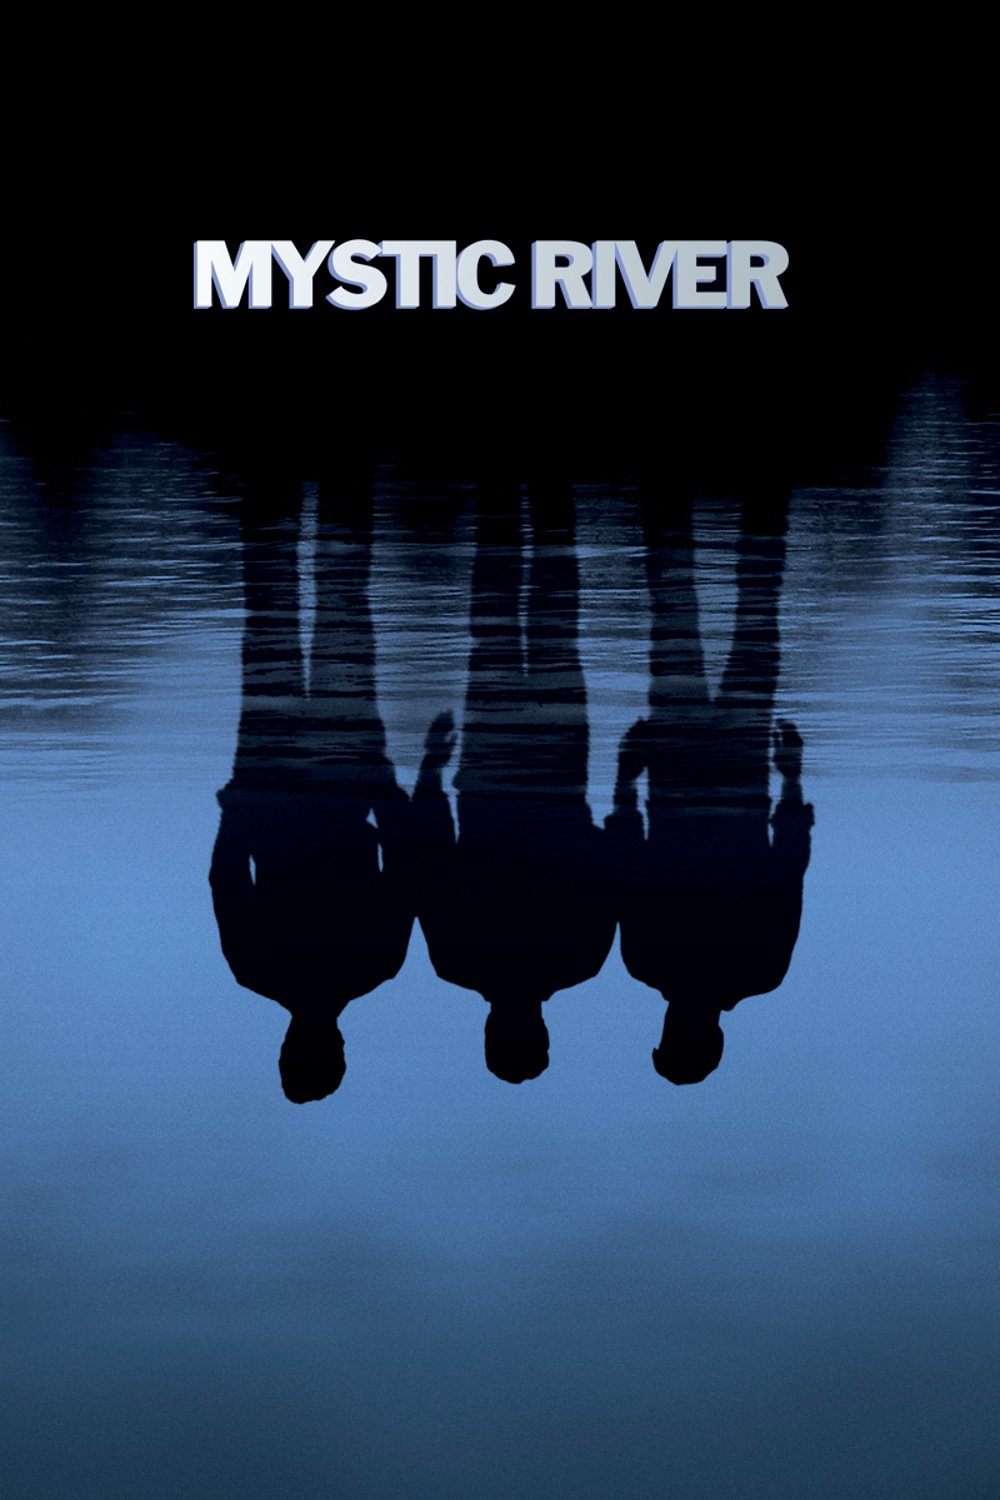 Plakat von "Mystic River"